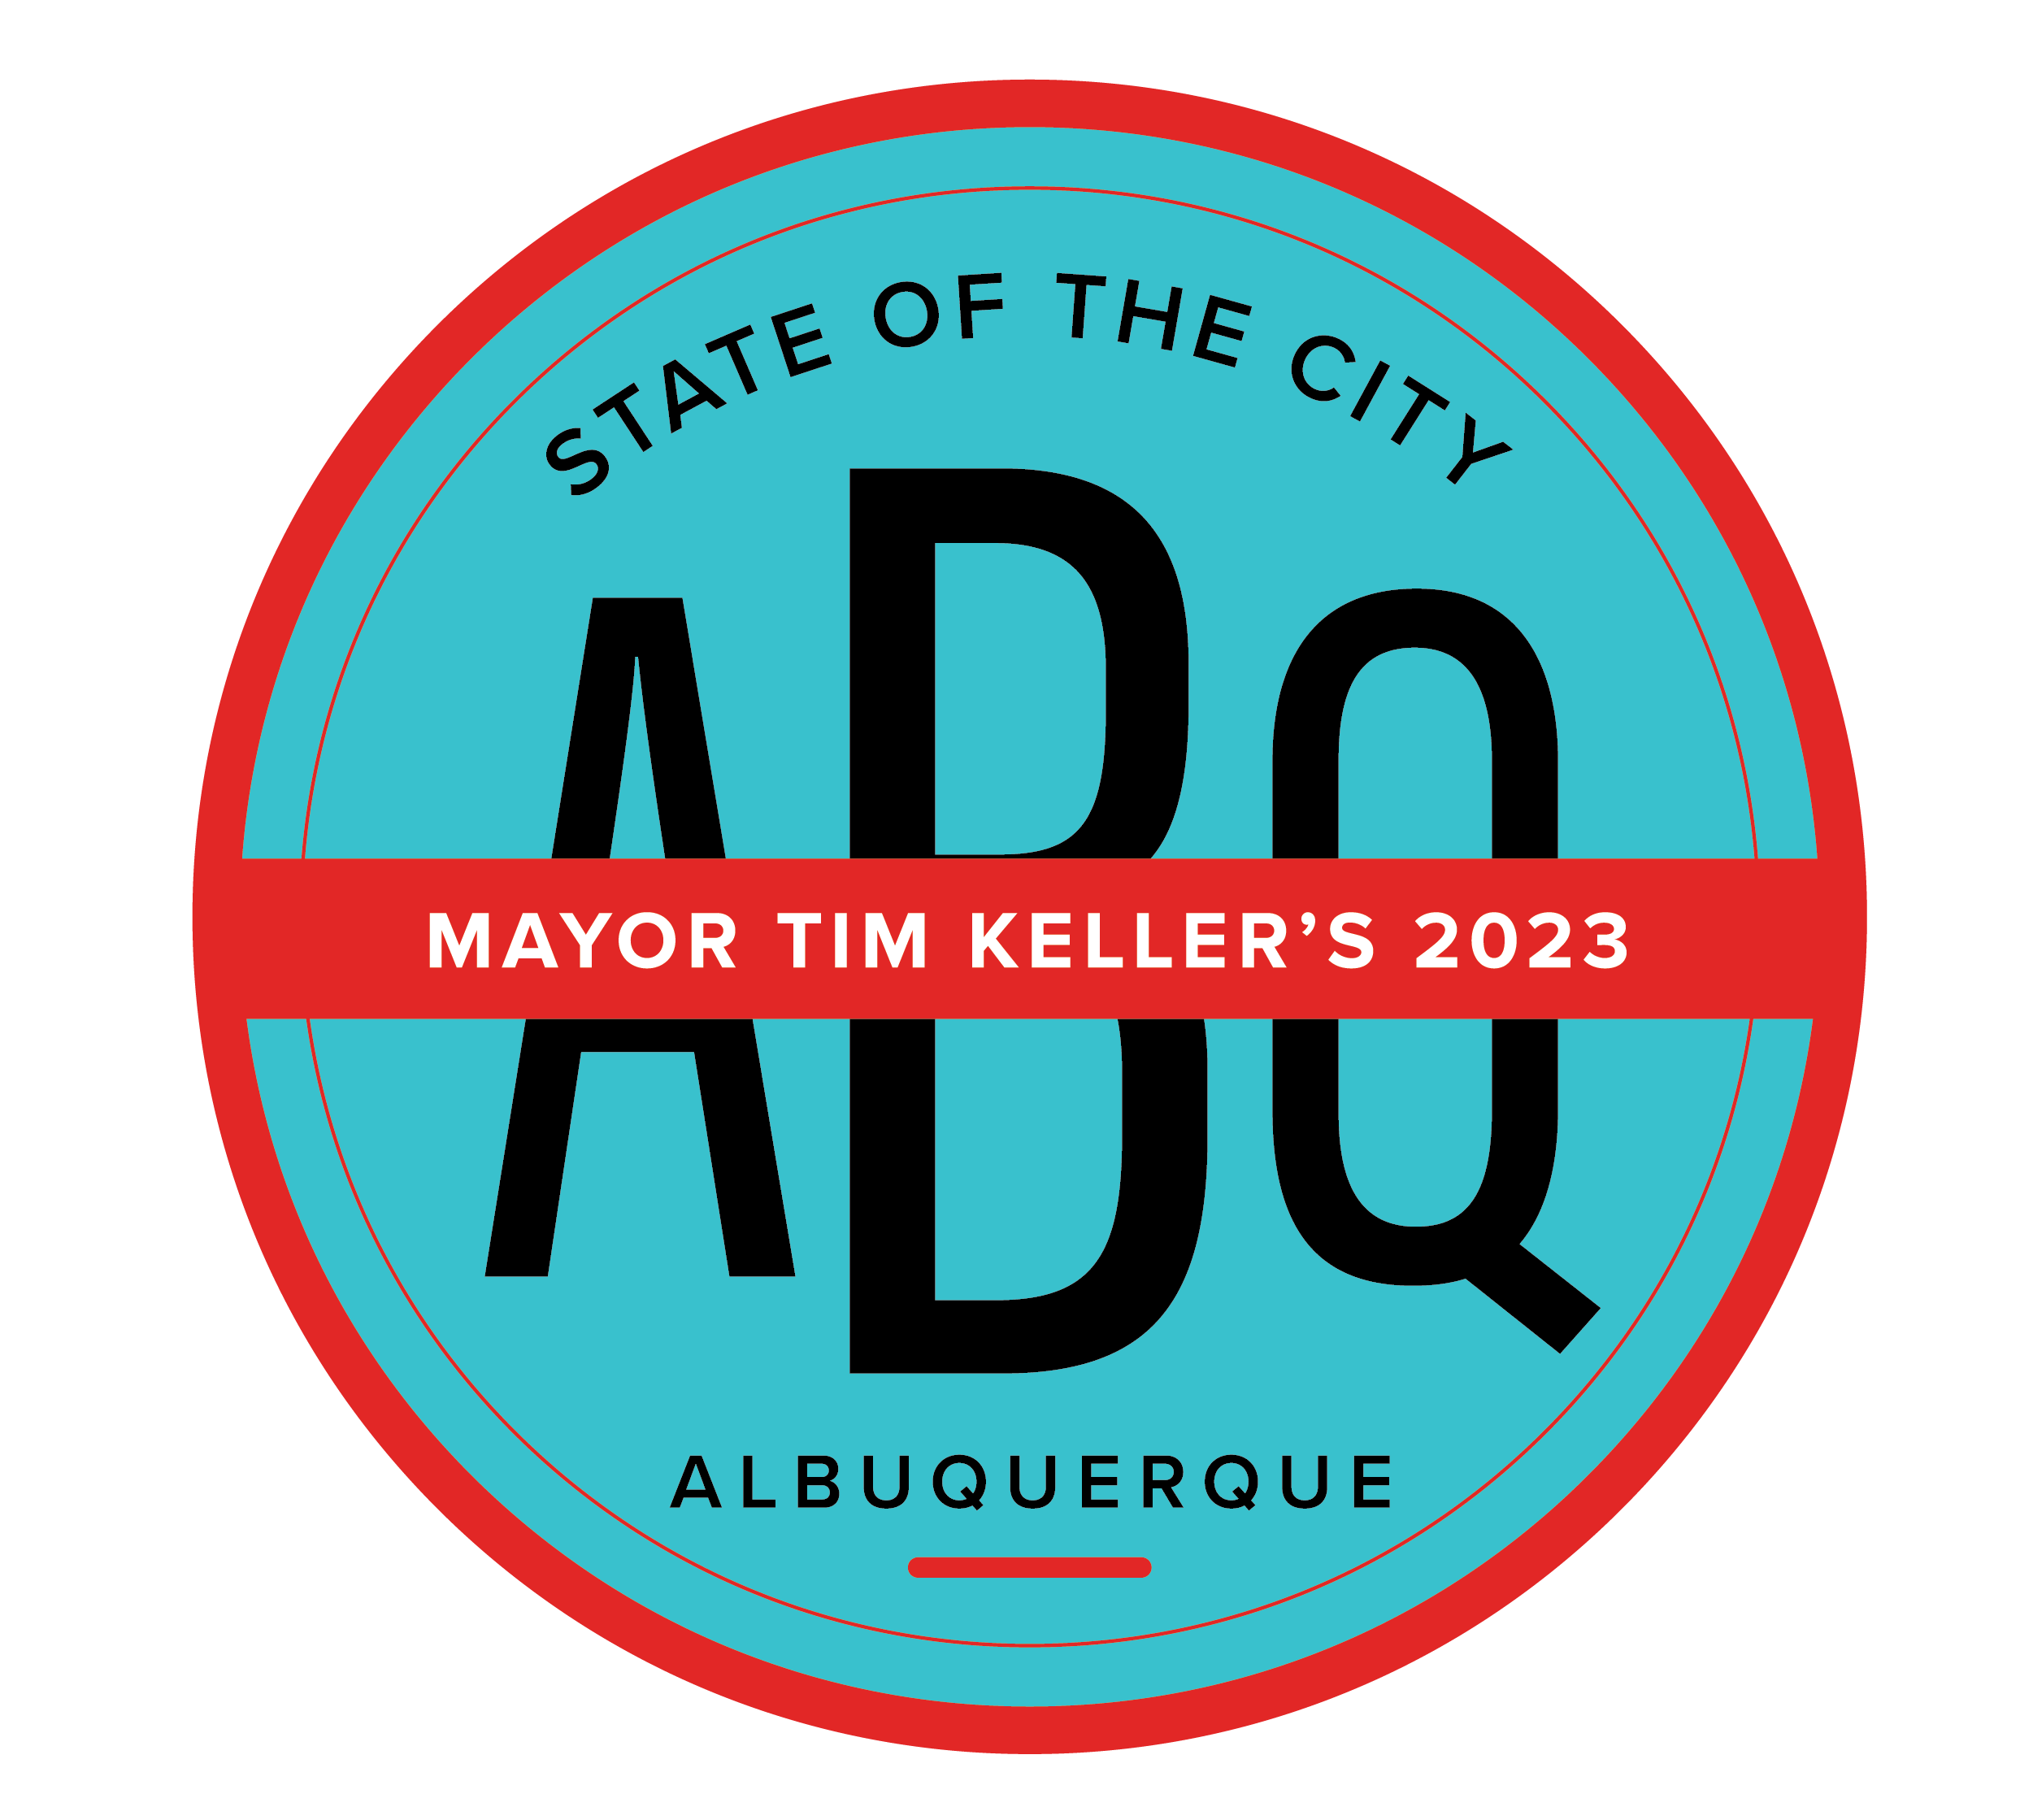 Mayor Tim Keller's 2023 State of the City Logo